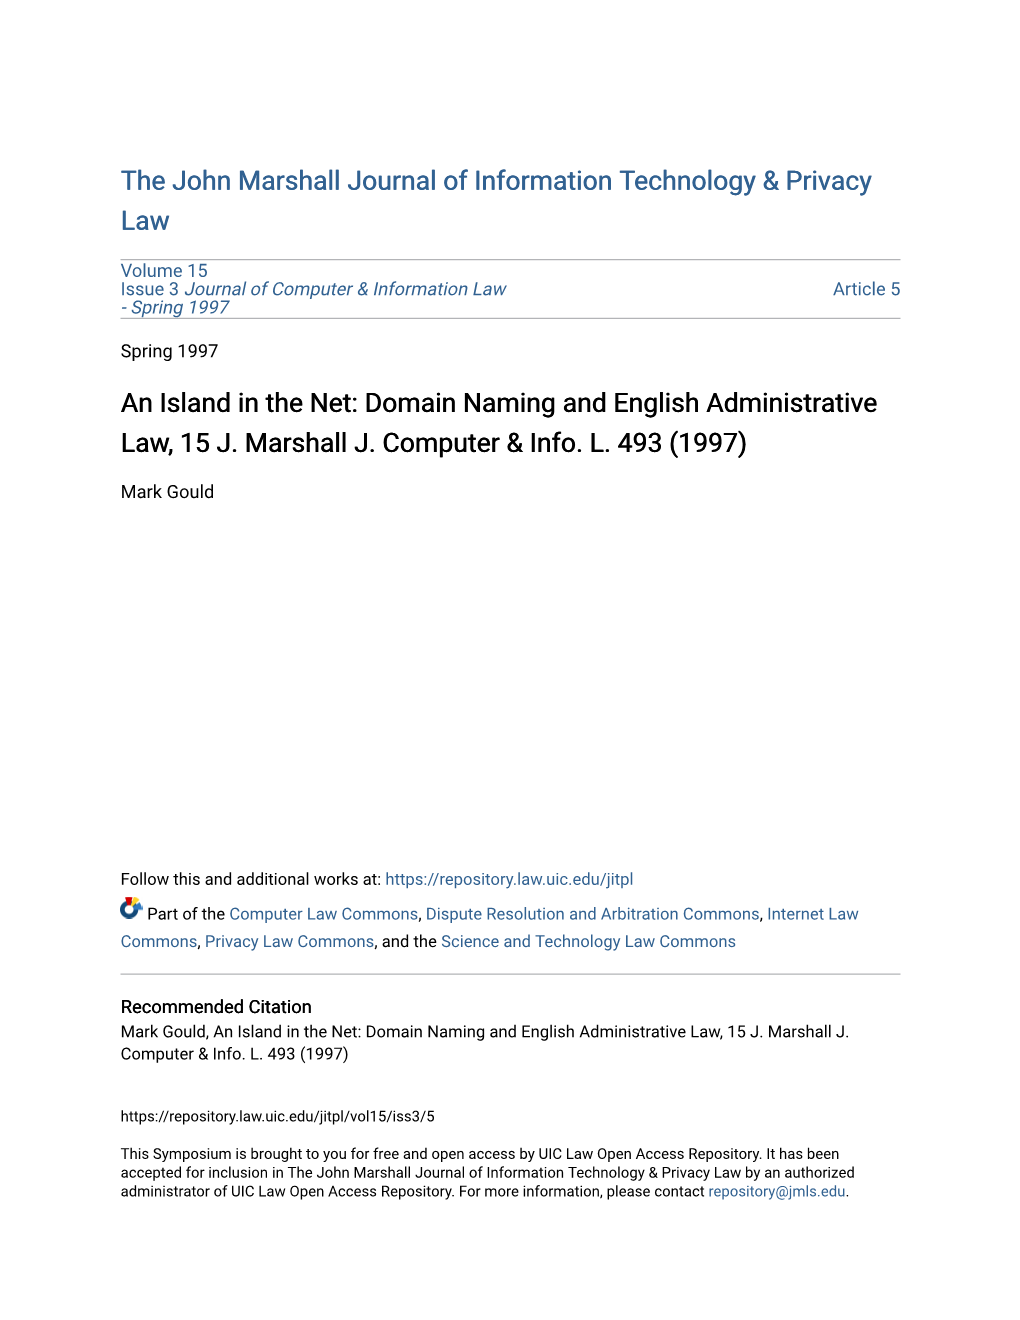 Domain Naming and English Administrative Law, 15 J. Marshall J